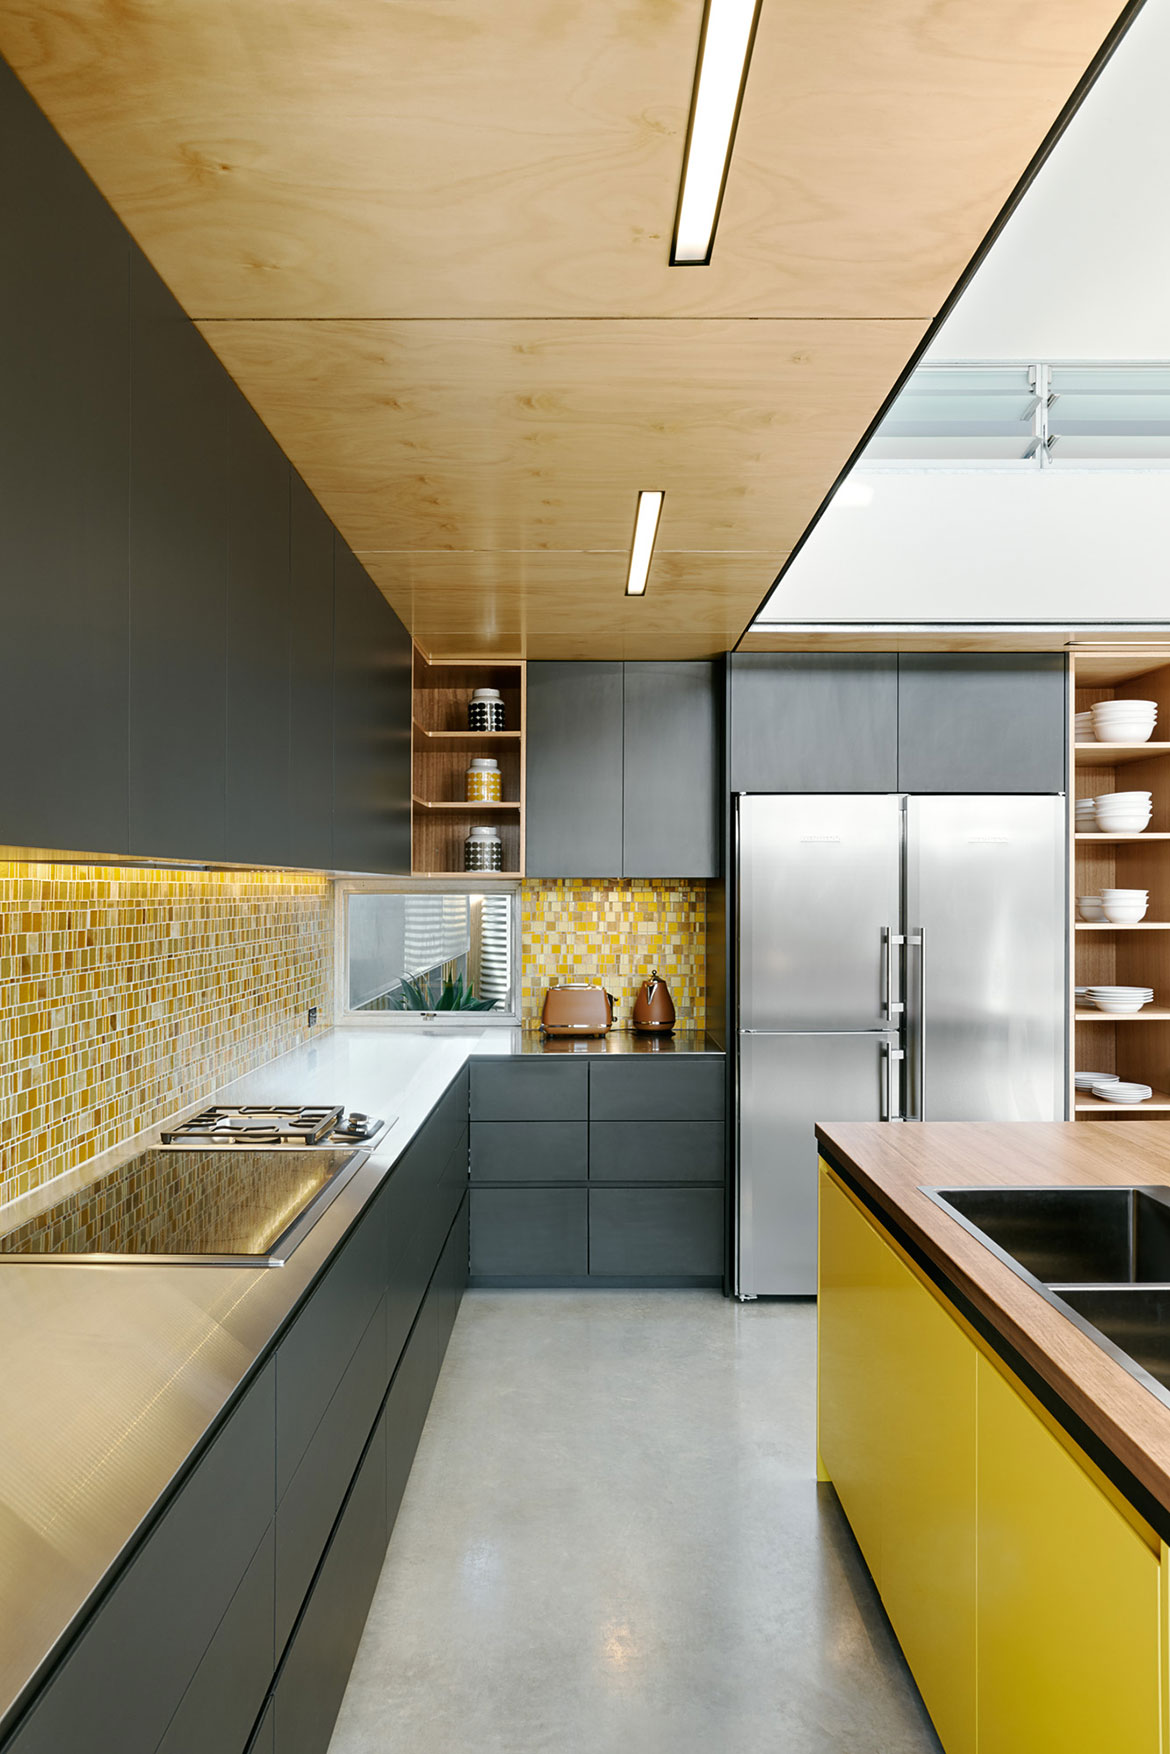 Habitus Living Laneway House Zen Architects kitchen